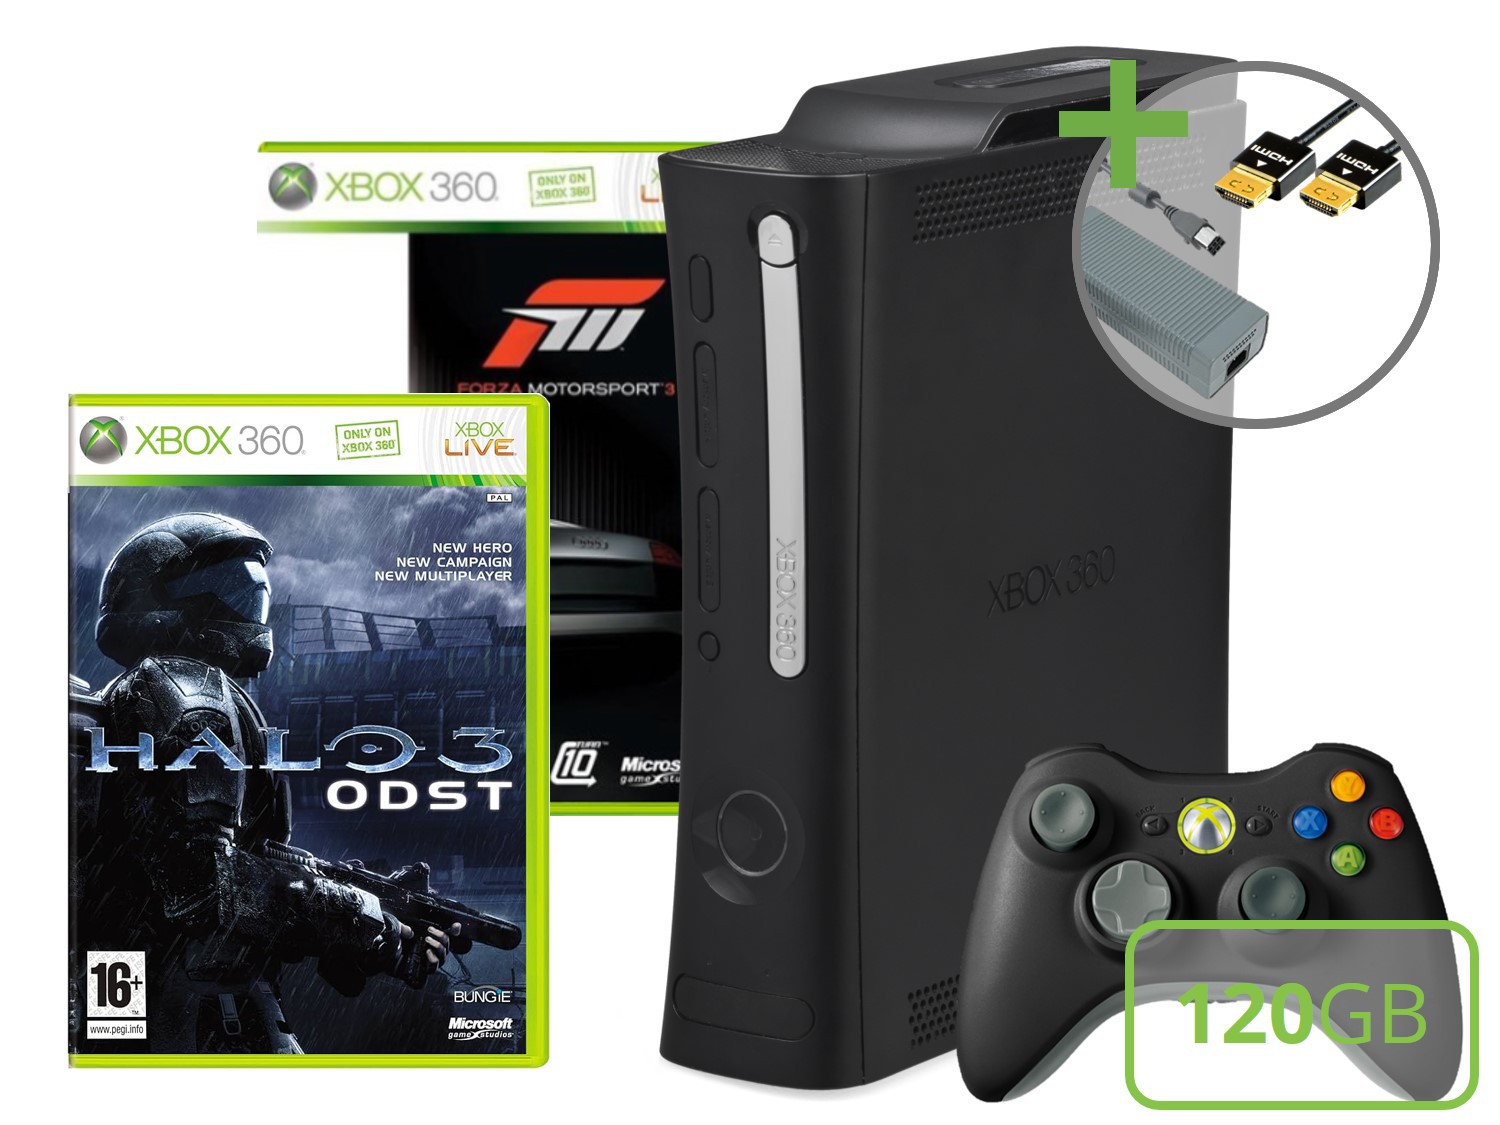 Microsoft Xbox 360 Elite Starter Pack - Forza Motorsport 3 and Halo 3: ODST Edition - Xbox 360 Hardware